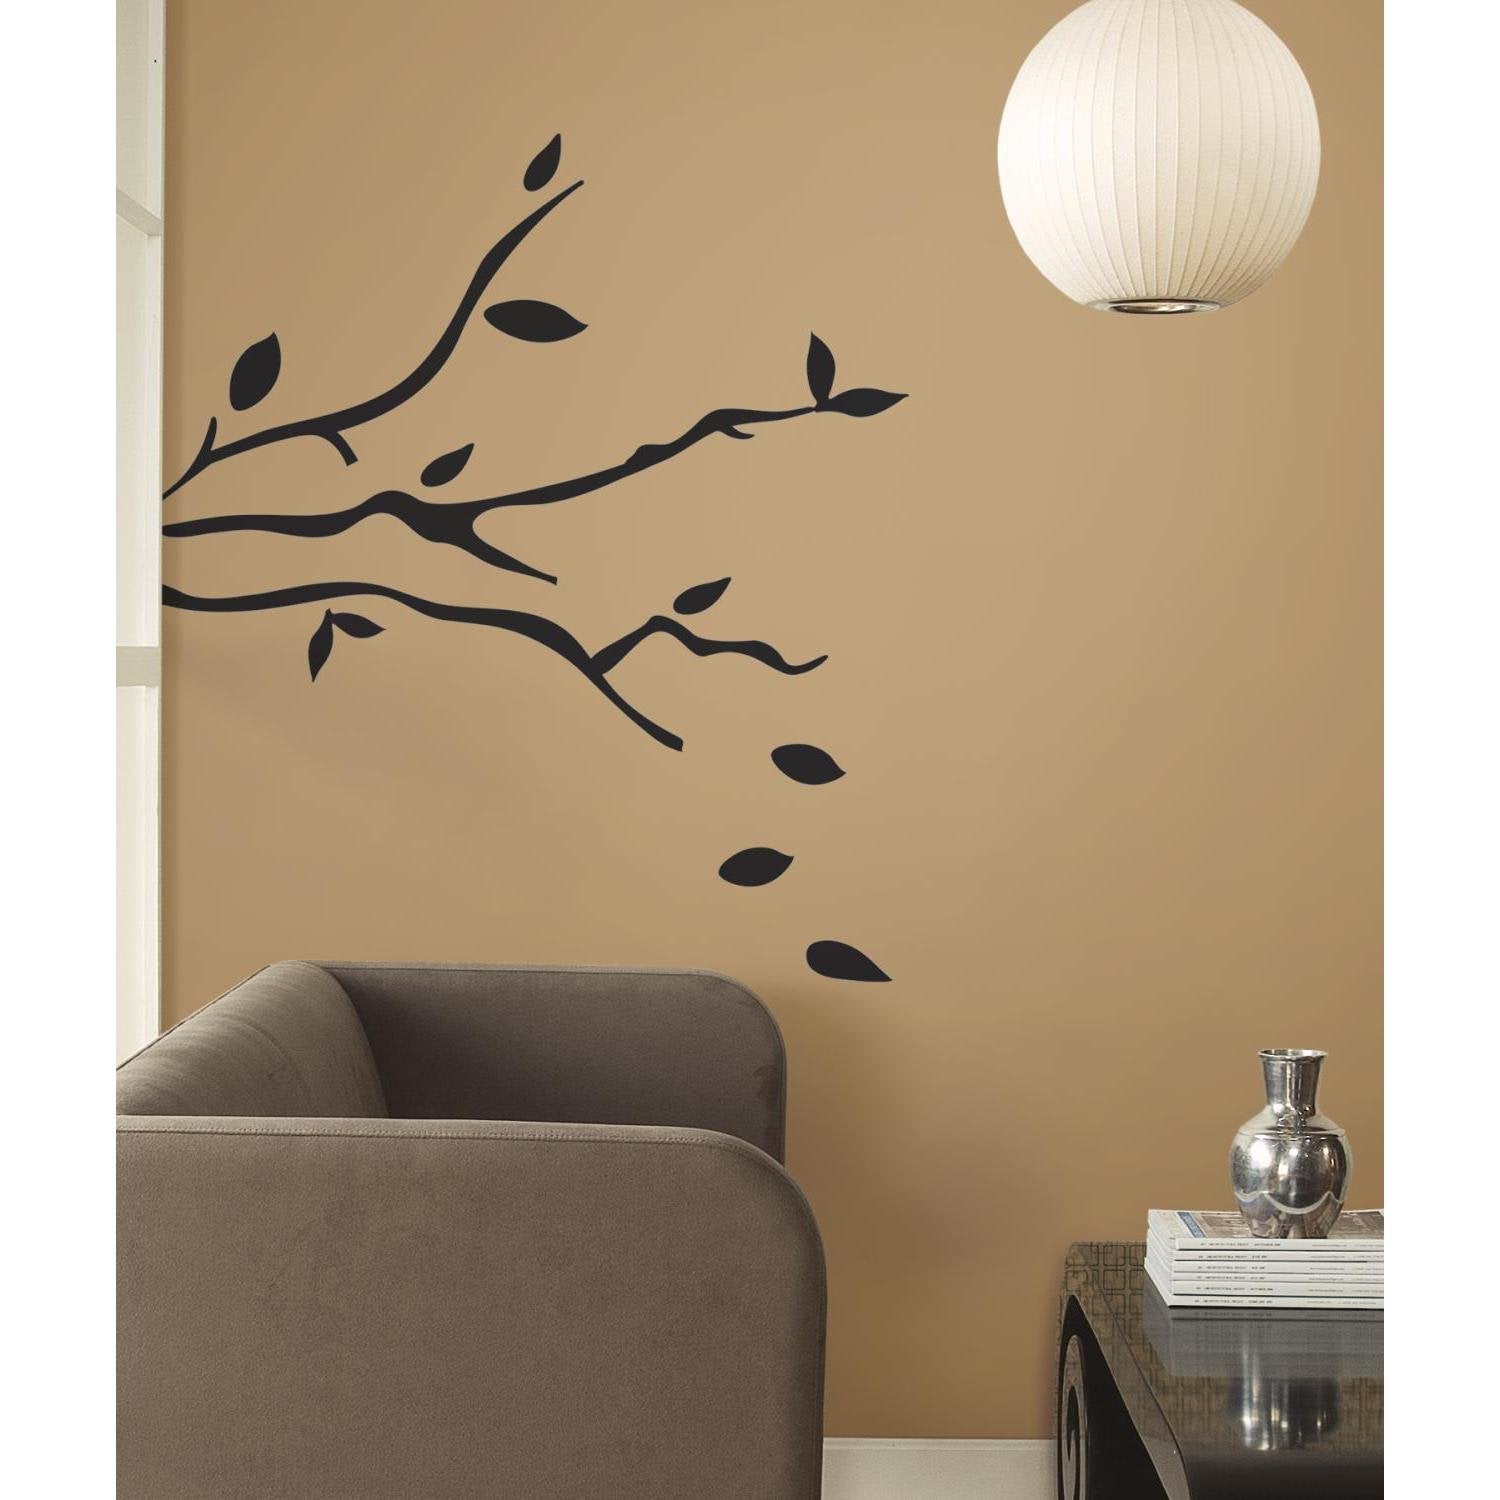 Adhesivo de pared de café vinilo decorativo de pared de árbol para